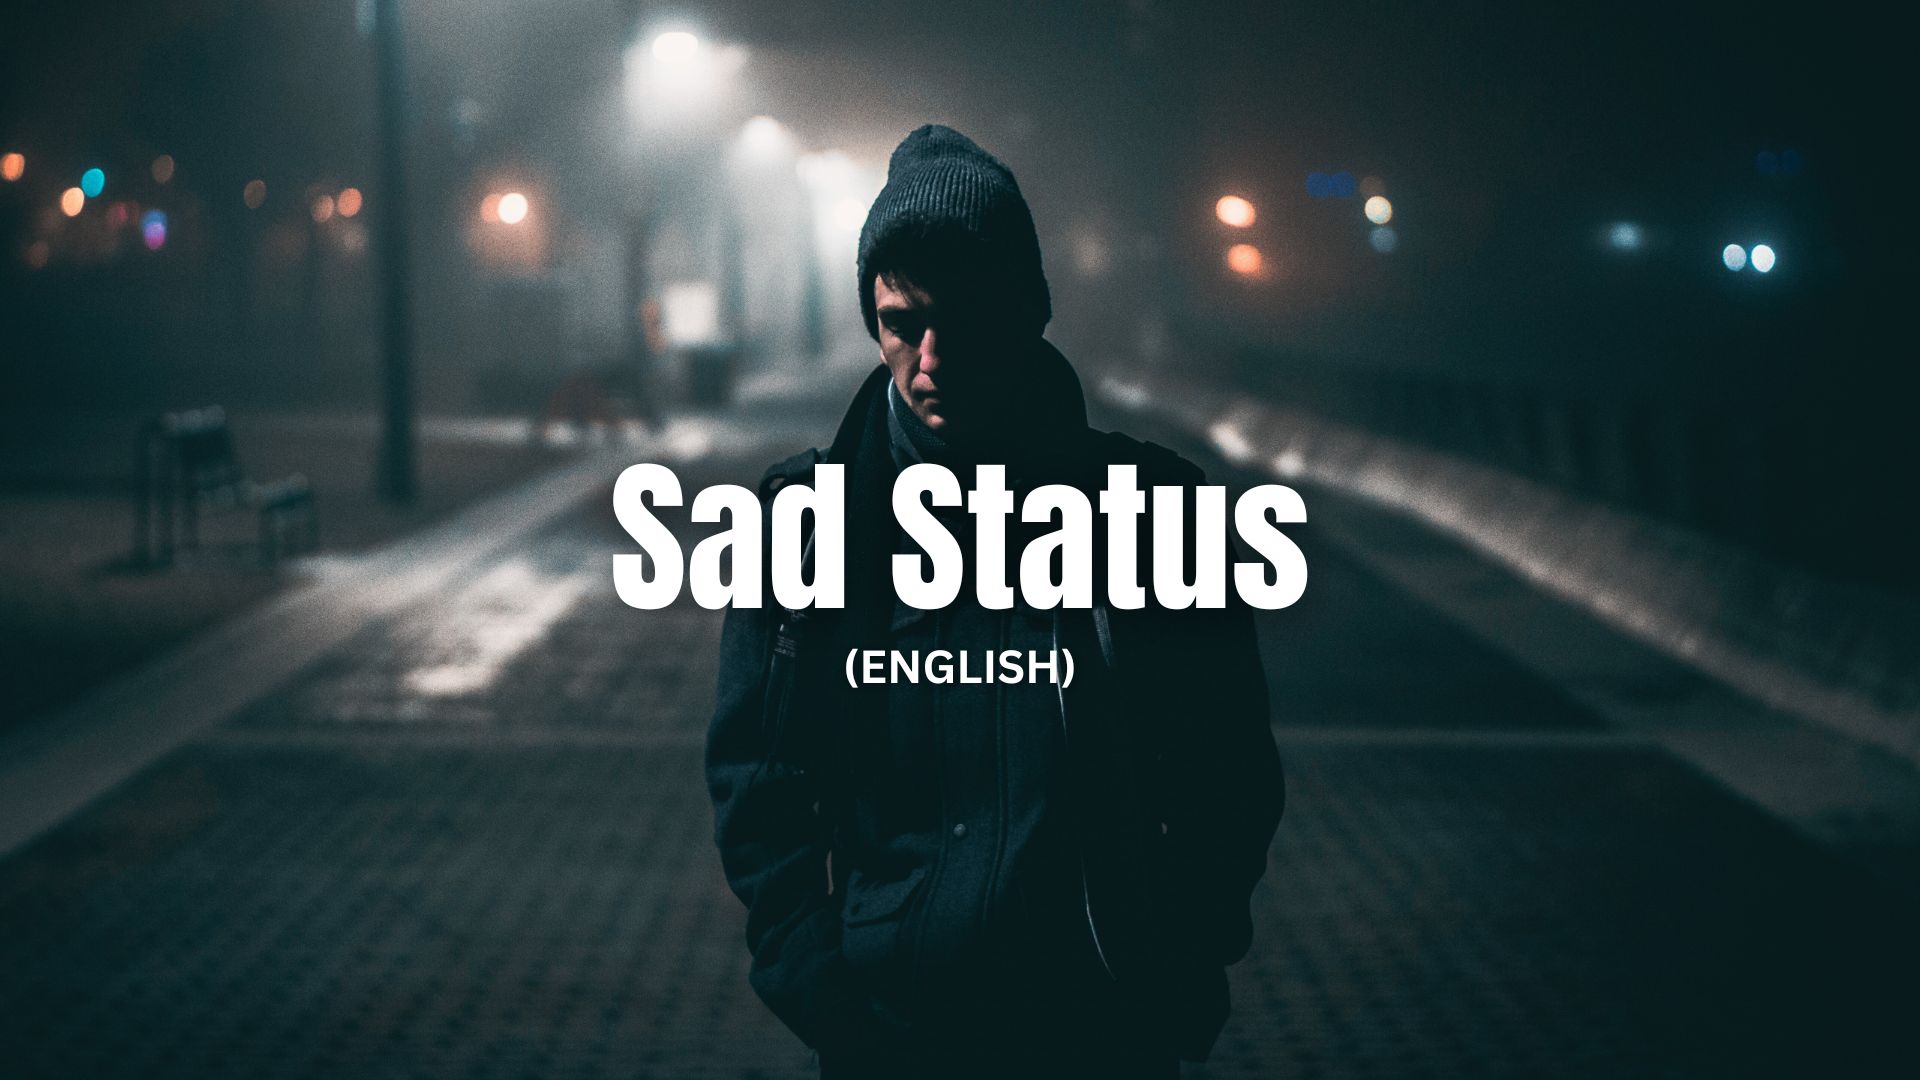 Sad Status in English